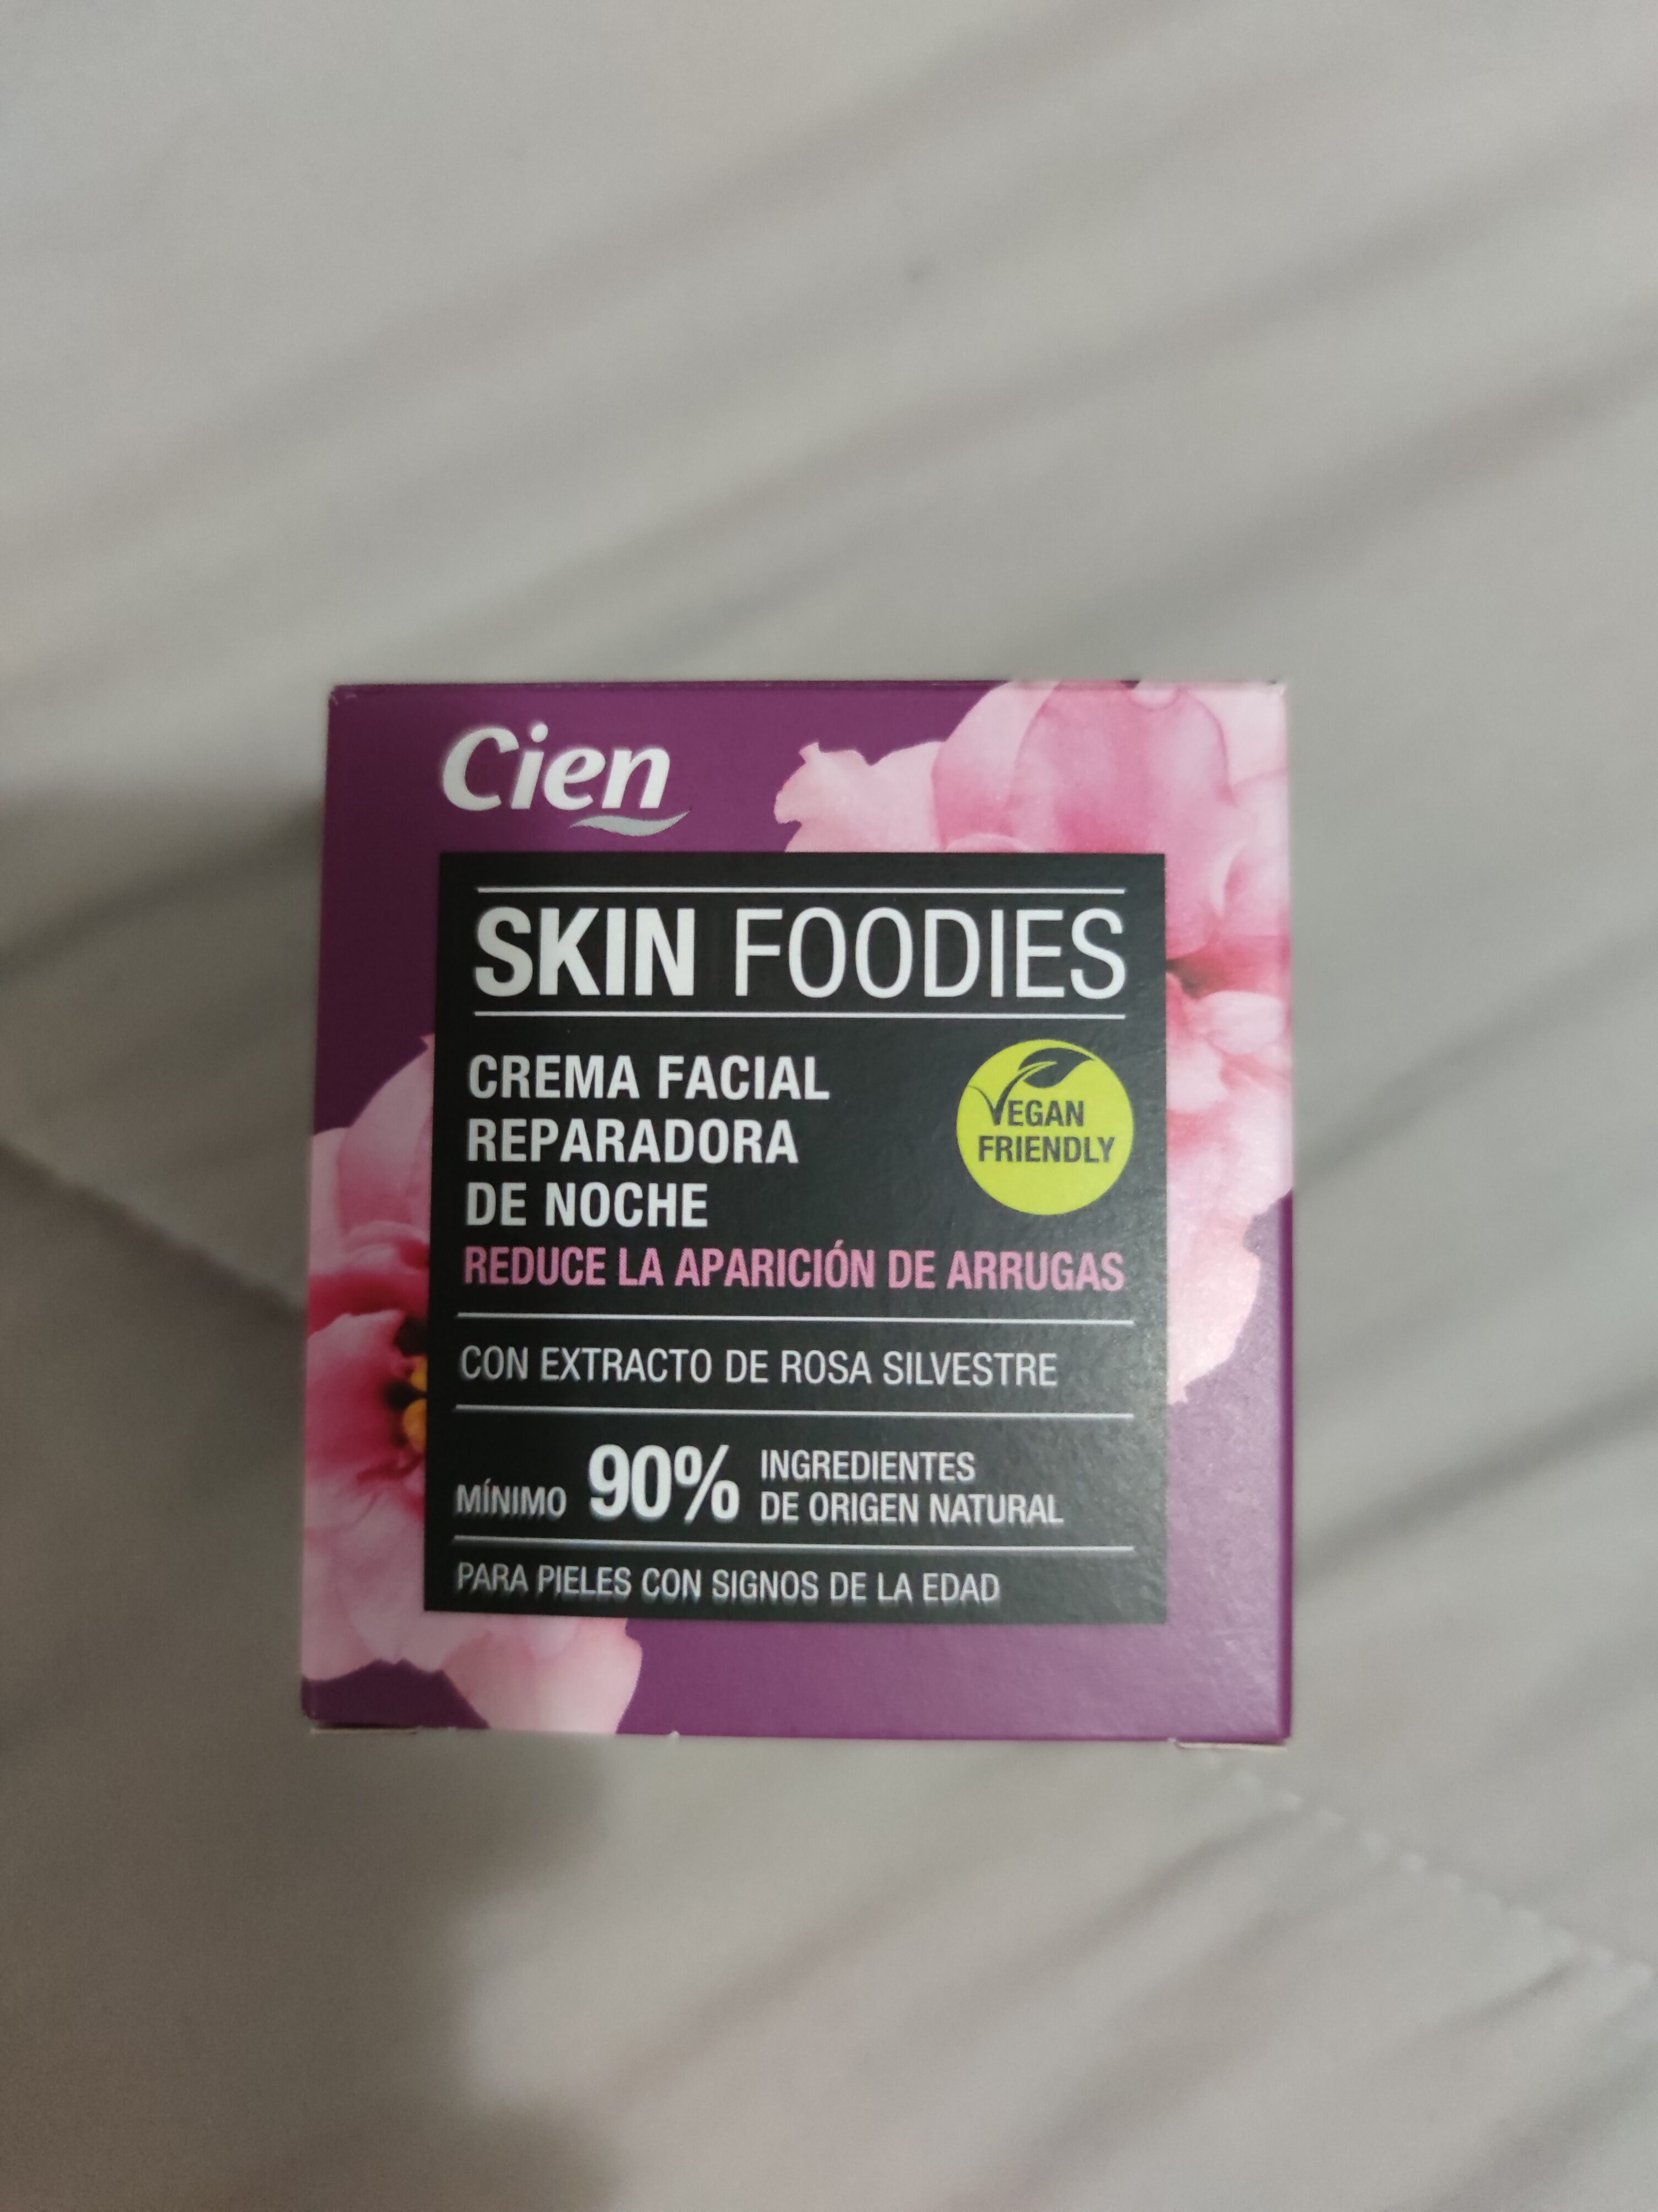 Skin foodies, crema facial reparadora de noche - Produit - fr